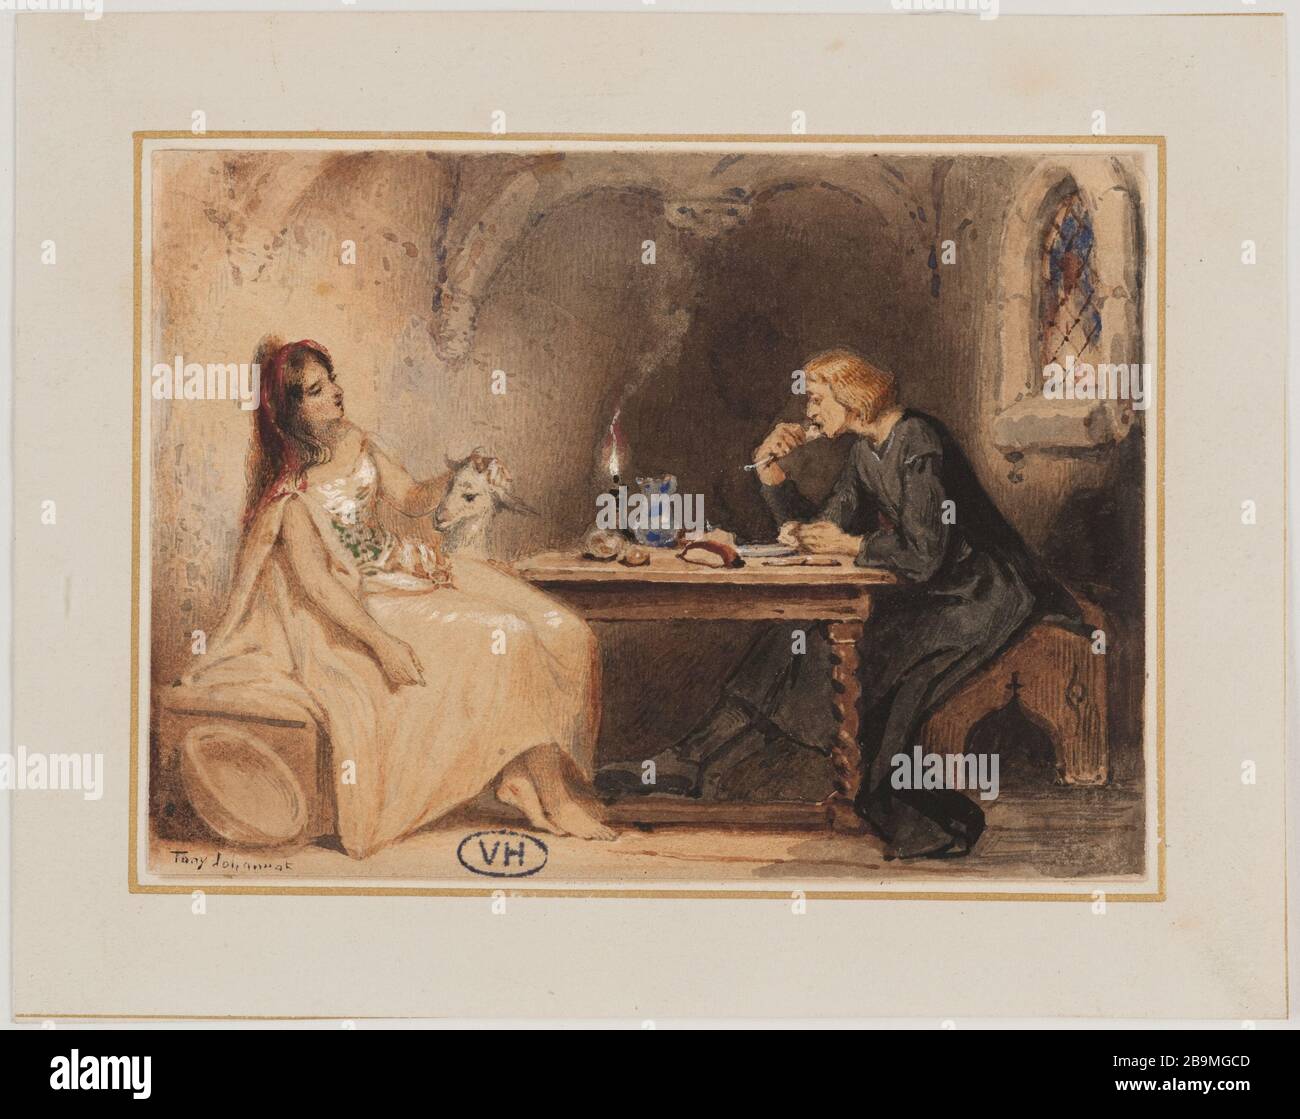 LO SMERALDO E GRINGOIRE Tony Johannot. 'La Esmeralda et Gringoire'. Aquarelle sur papier, 1836?. Parigi, Maison de Victor Hugo. Foto Stock